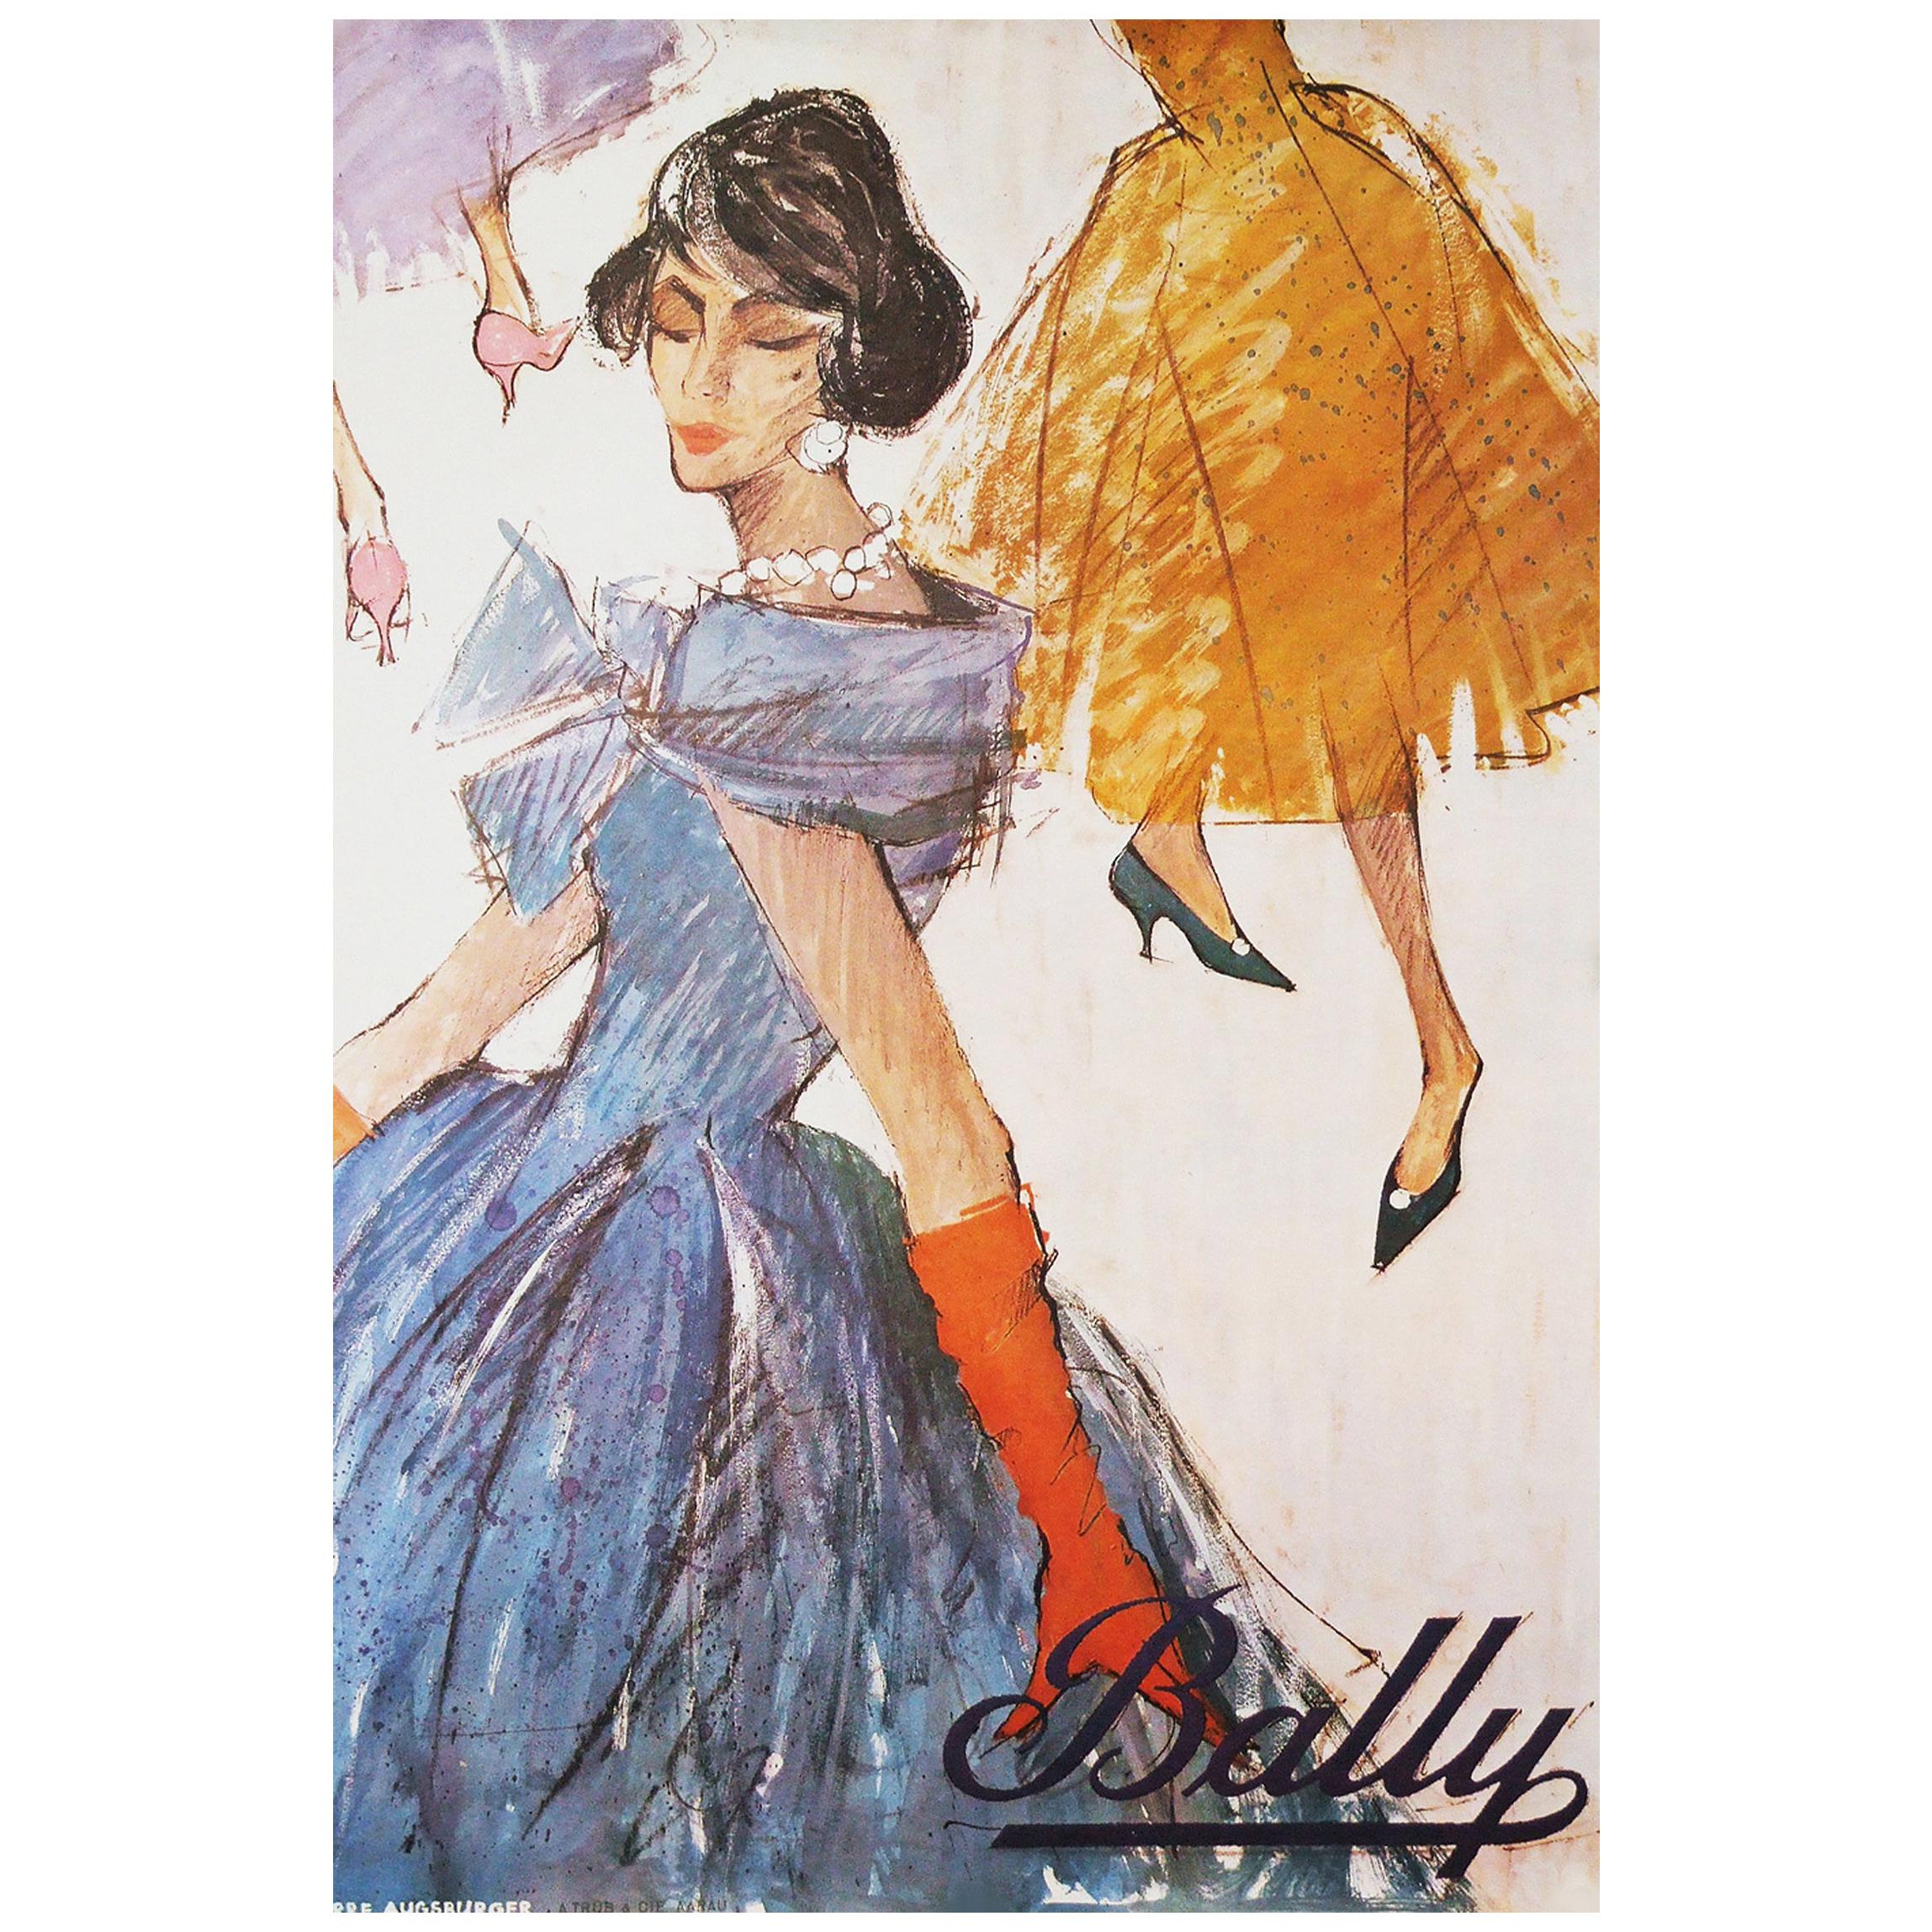 Original 1950s Bally Shoes Advertising Poster Fashion